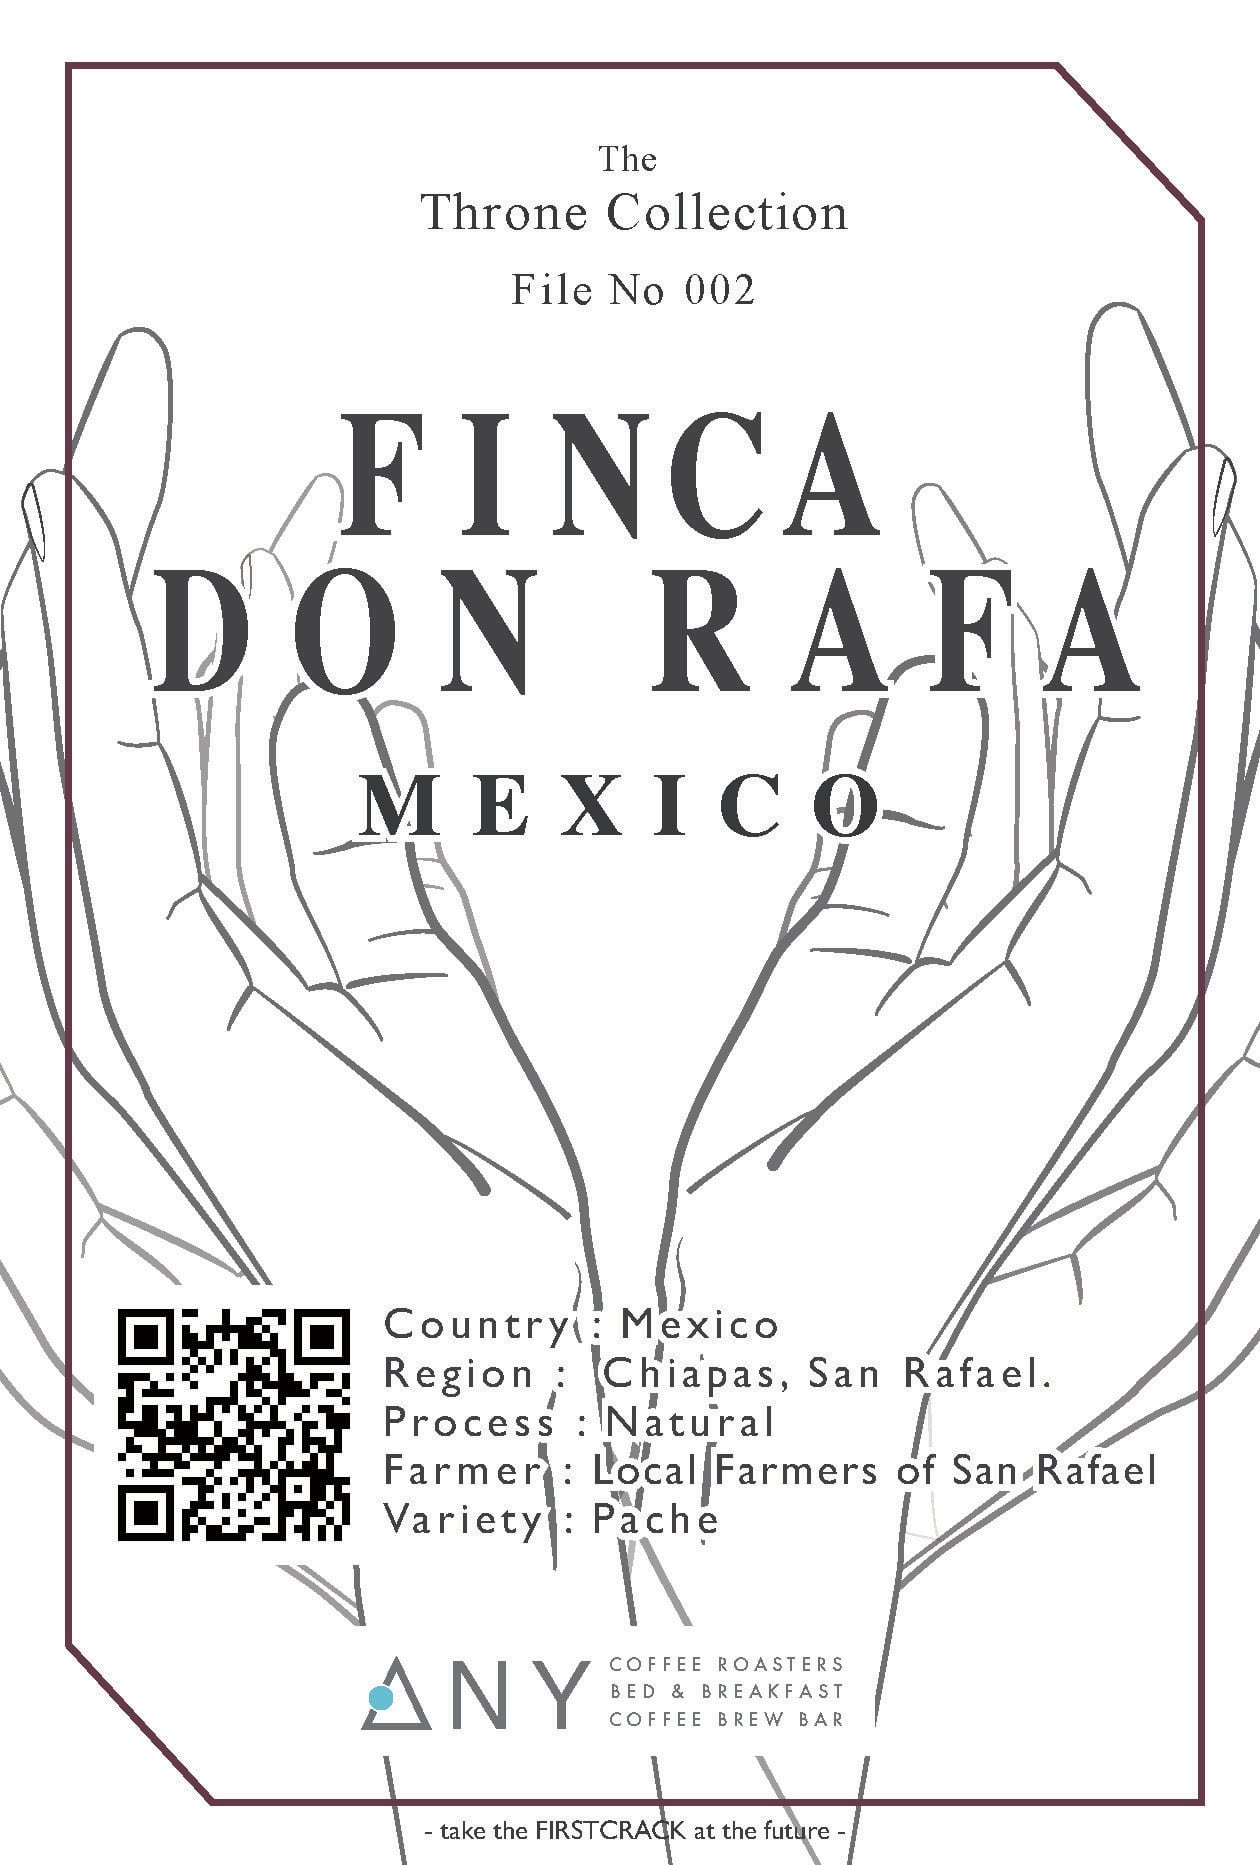 The Throne Collection File No 002 [100g] - Finca Don Rafa, Mexico | ANY  B&B+COFFEE | Nara, Japan powered by BASE